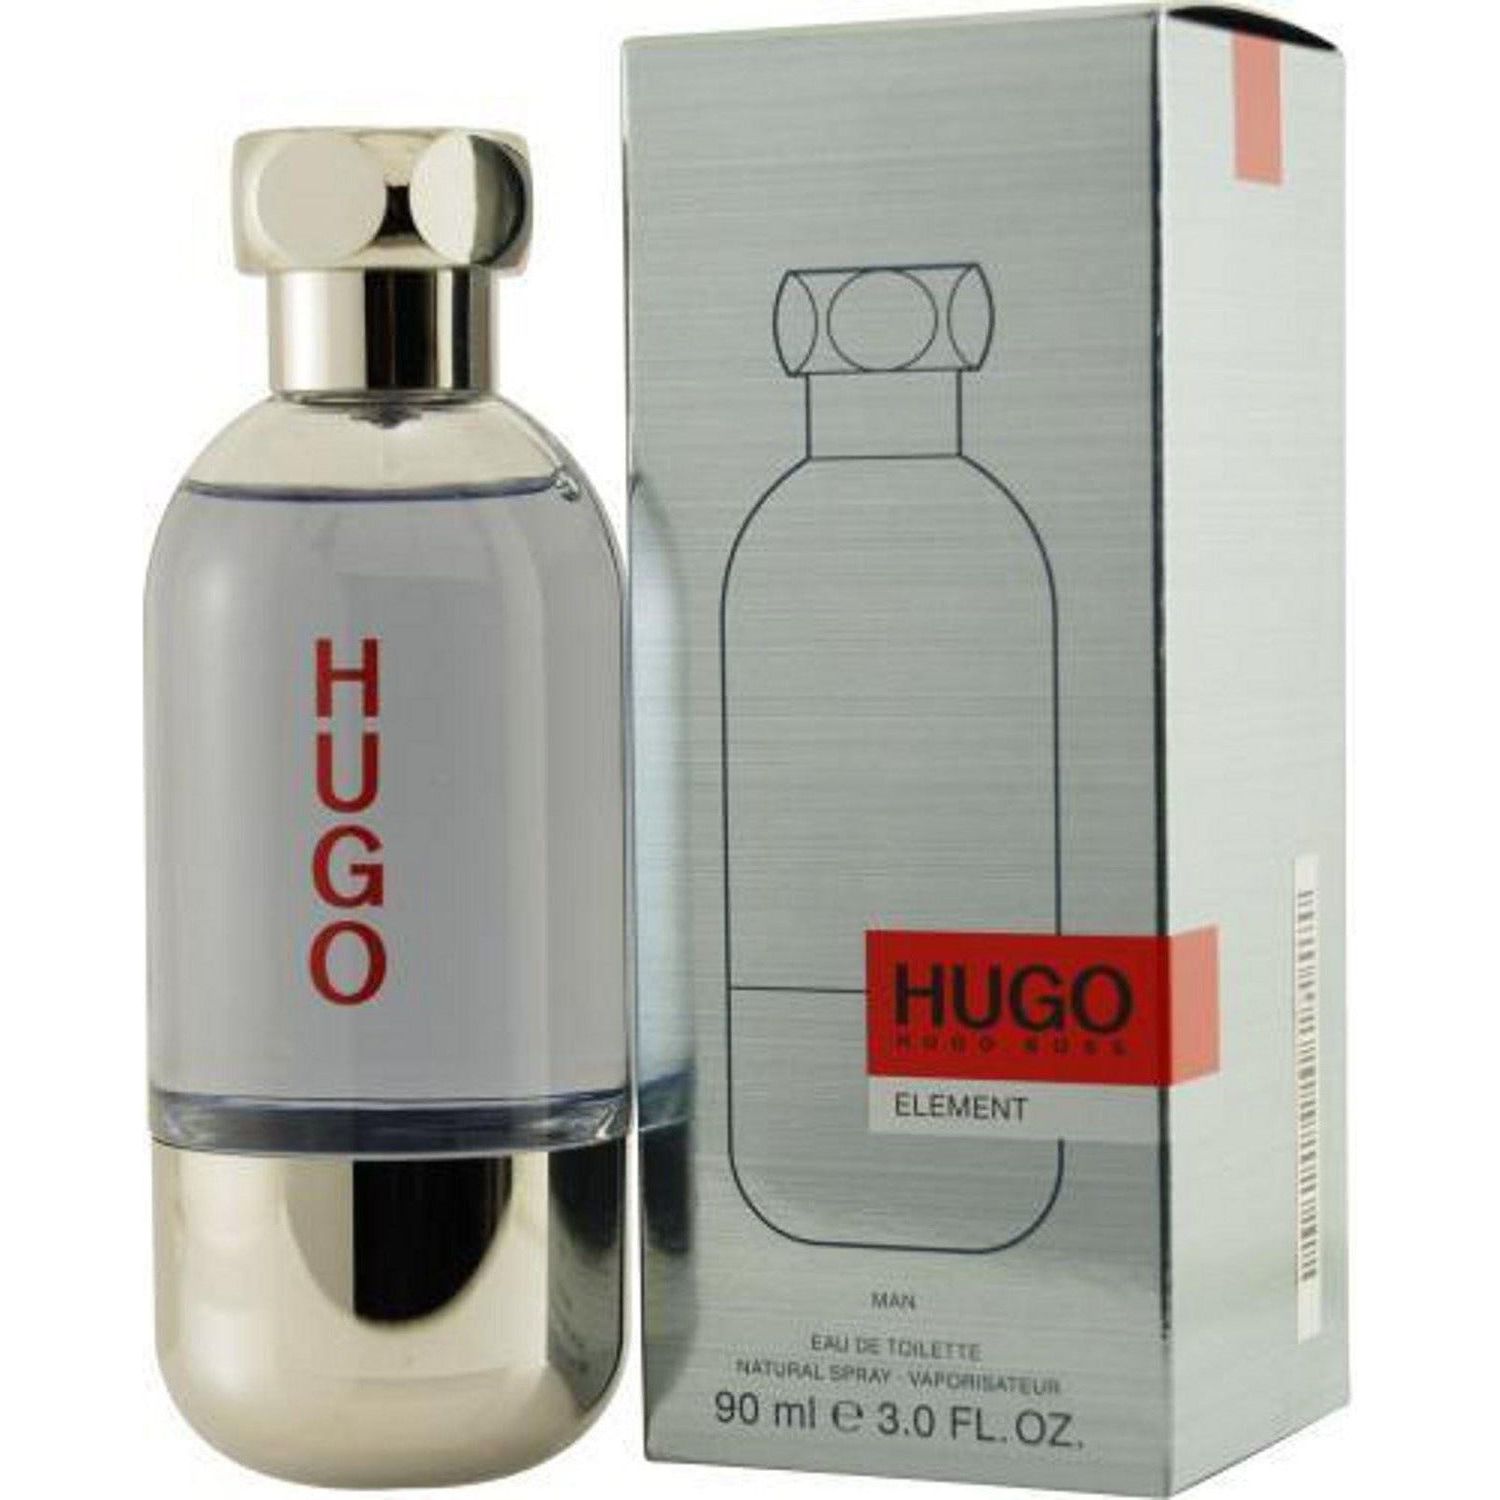 Ml hugo. Hugo Boss 40 ml. Hugo Boss Eau de Toilette. Boss Hugo Boss Eau de Toilette. Boss man for men by: Hugo Boss Eau de Toilette Spray.